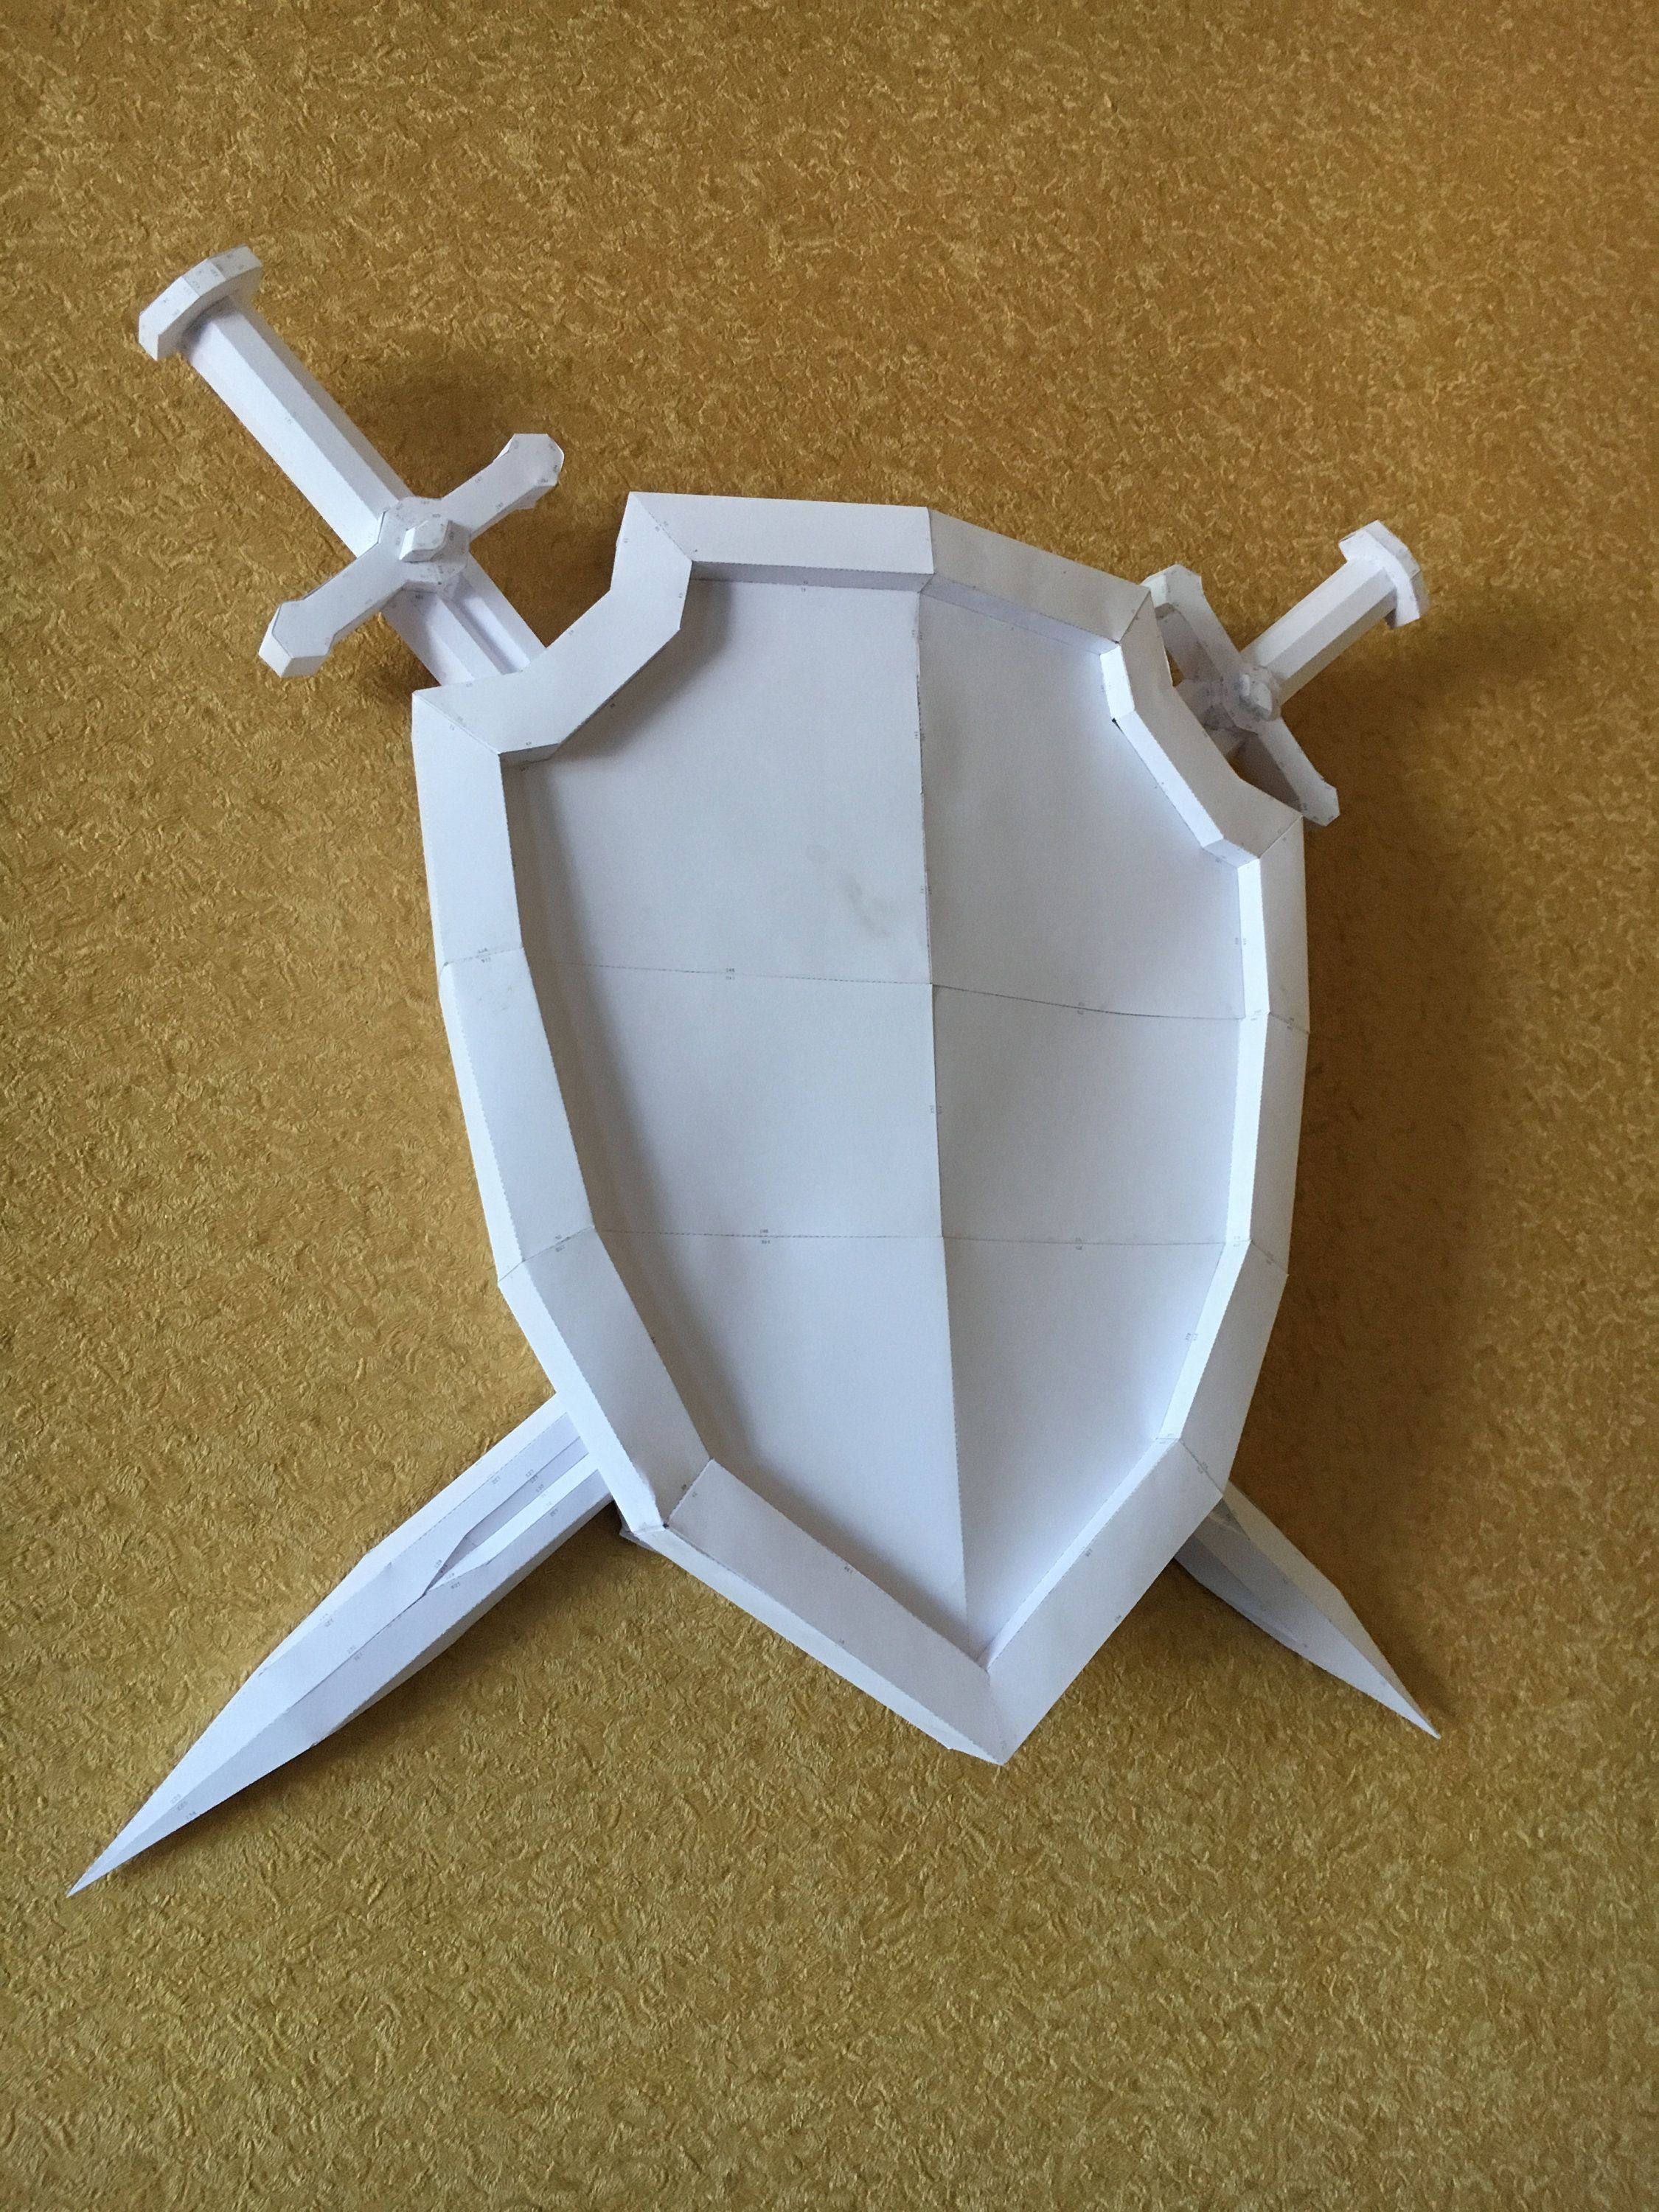 Papercraft 3d Model Sword Shield Diy Papercraft Model ÐÑÐ¼Ð°Ð¶Ð½ÑÐµ Ð¸Ð·Ð´ÐµÐ Ð¸Ñ